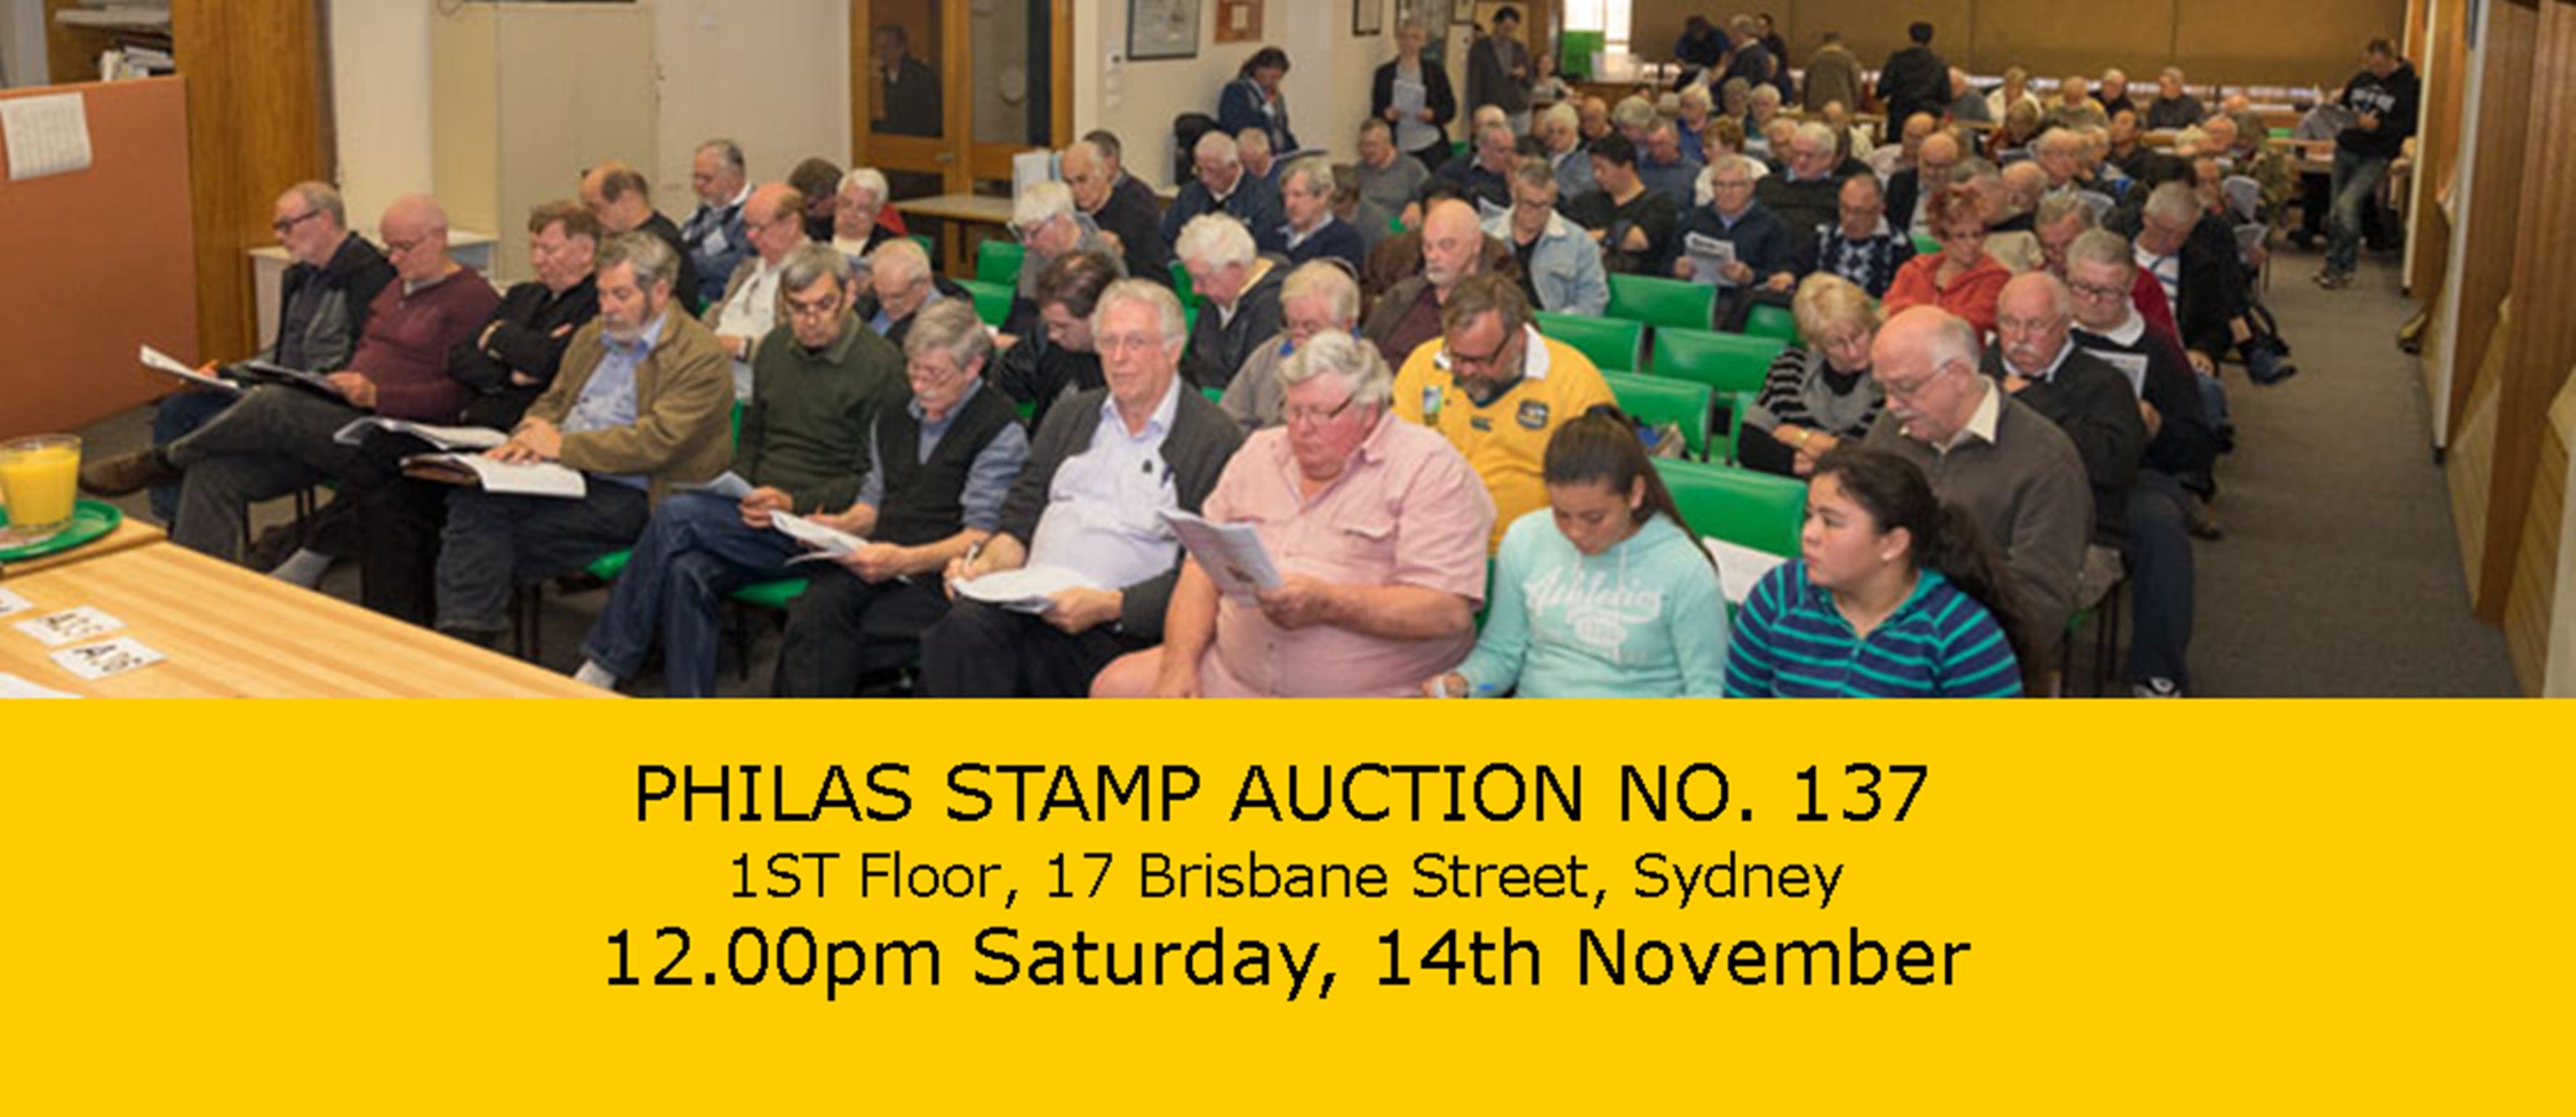 PHILAS Stamp Auction No. 137 - Geraldton Accommodation